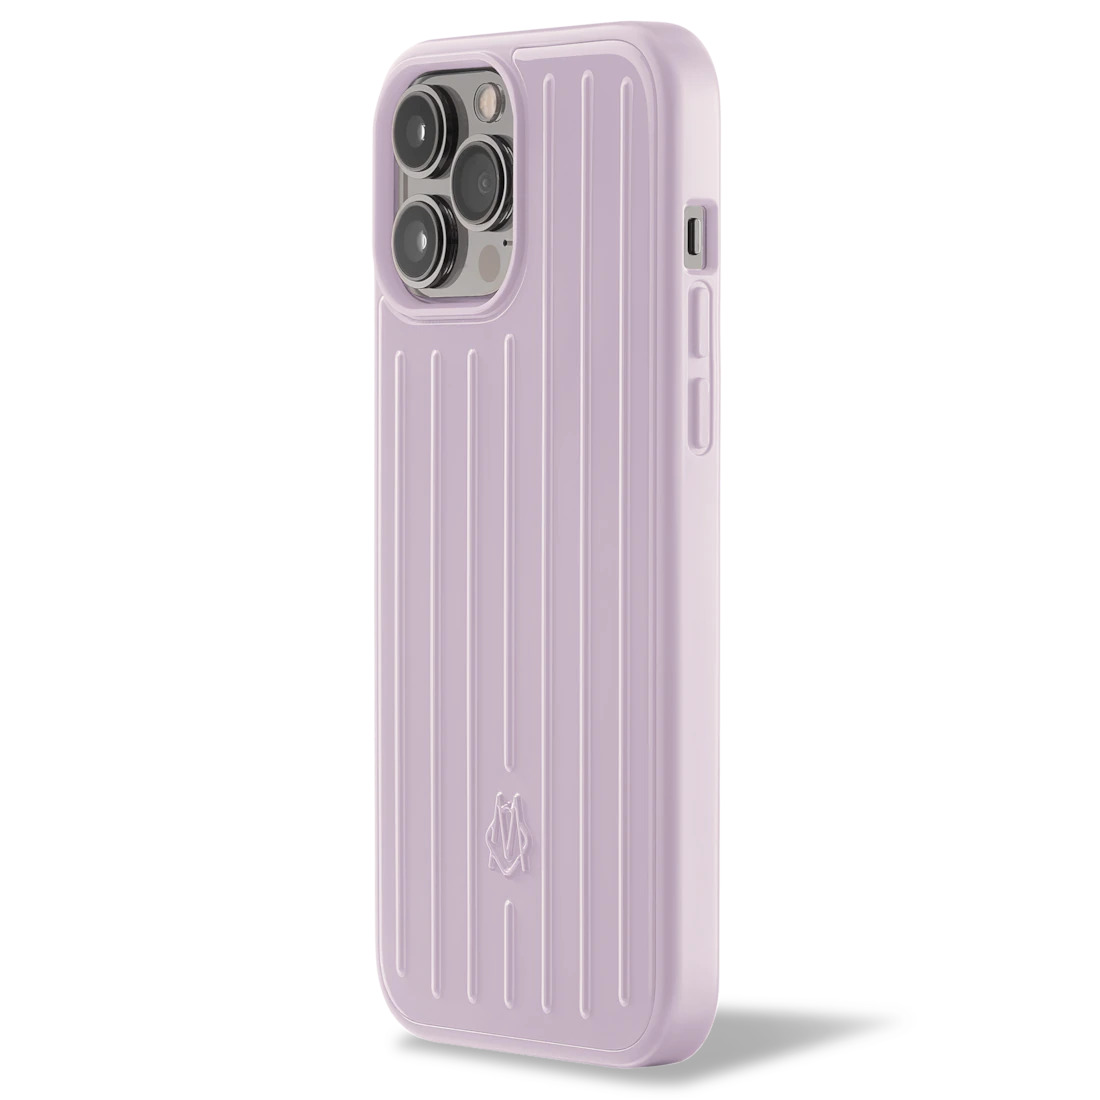 iPhone Accessories Lavande Purple Case for iPhone 13 Pro Max - 2